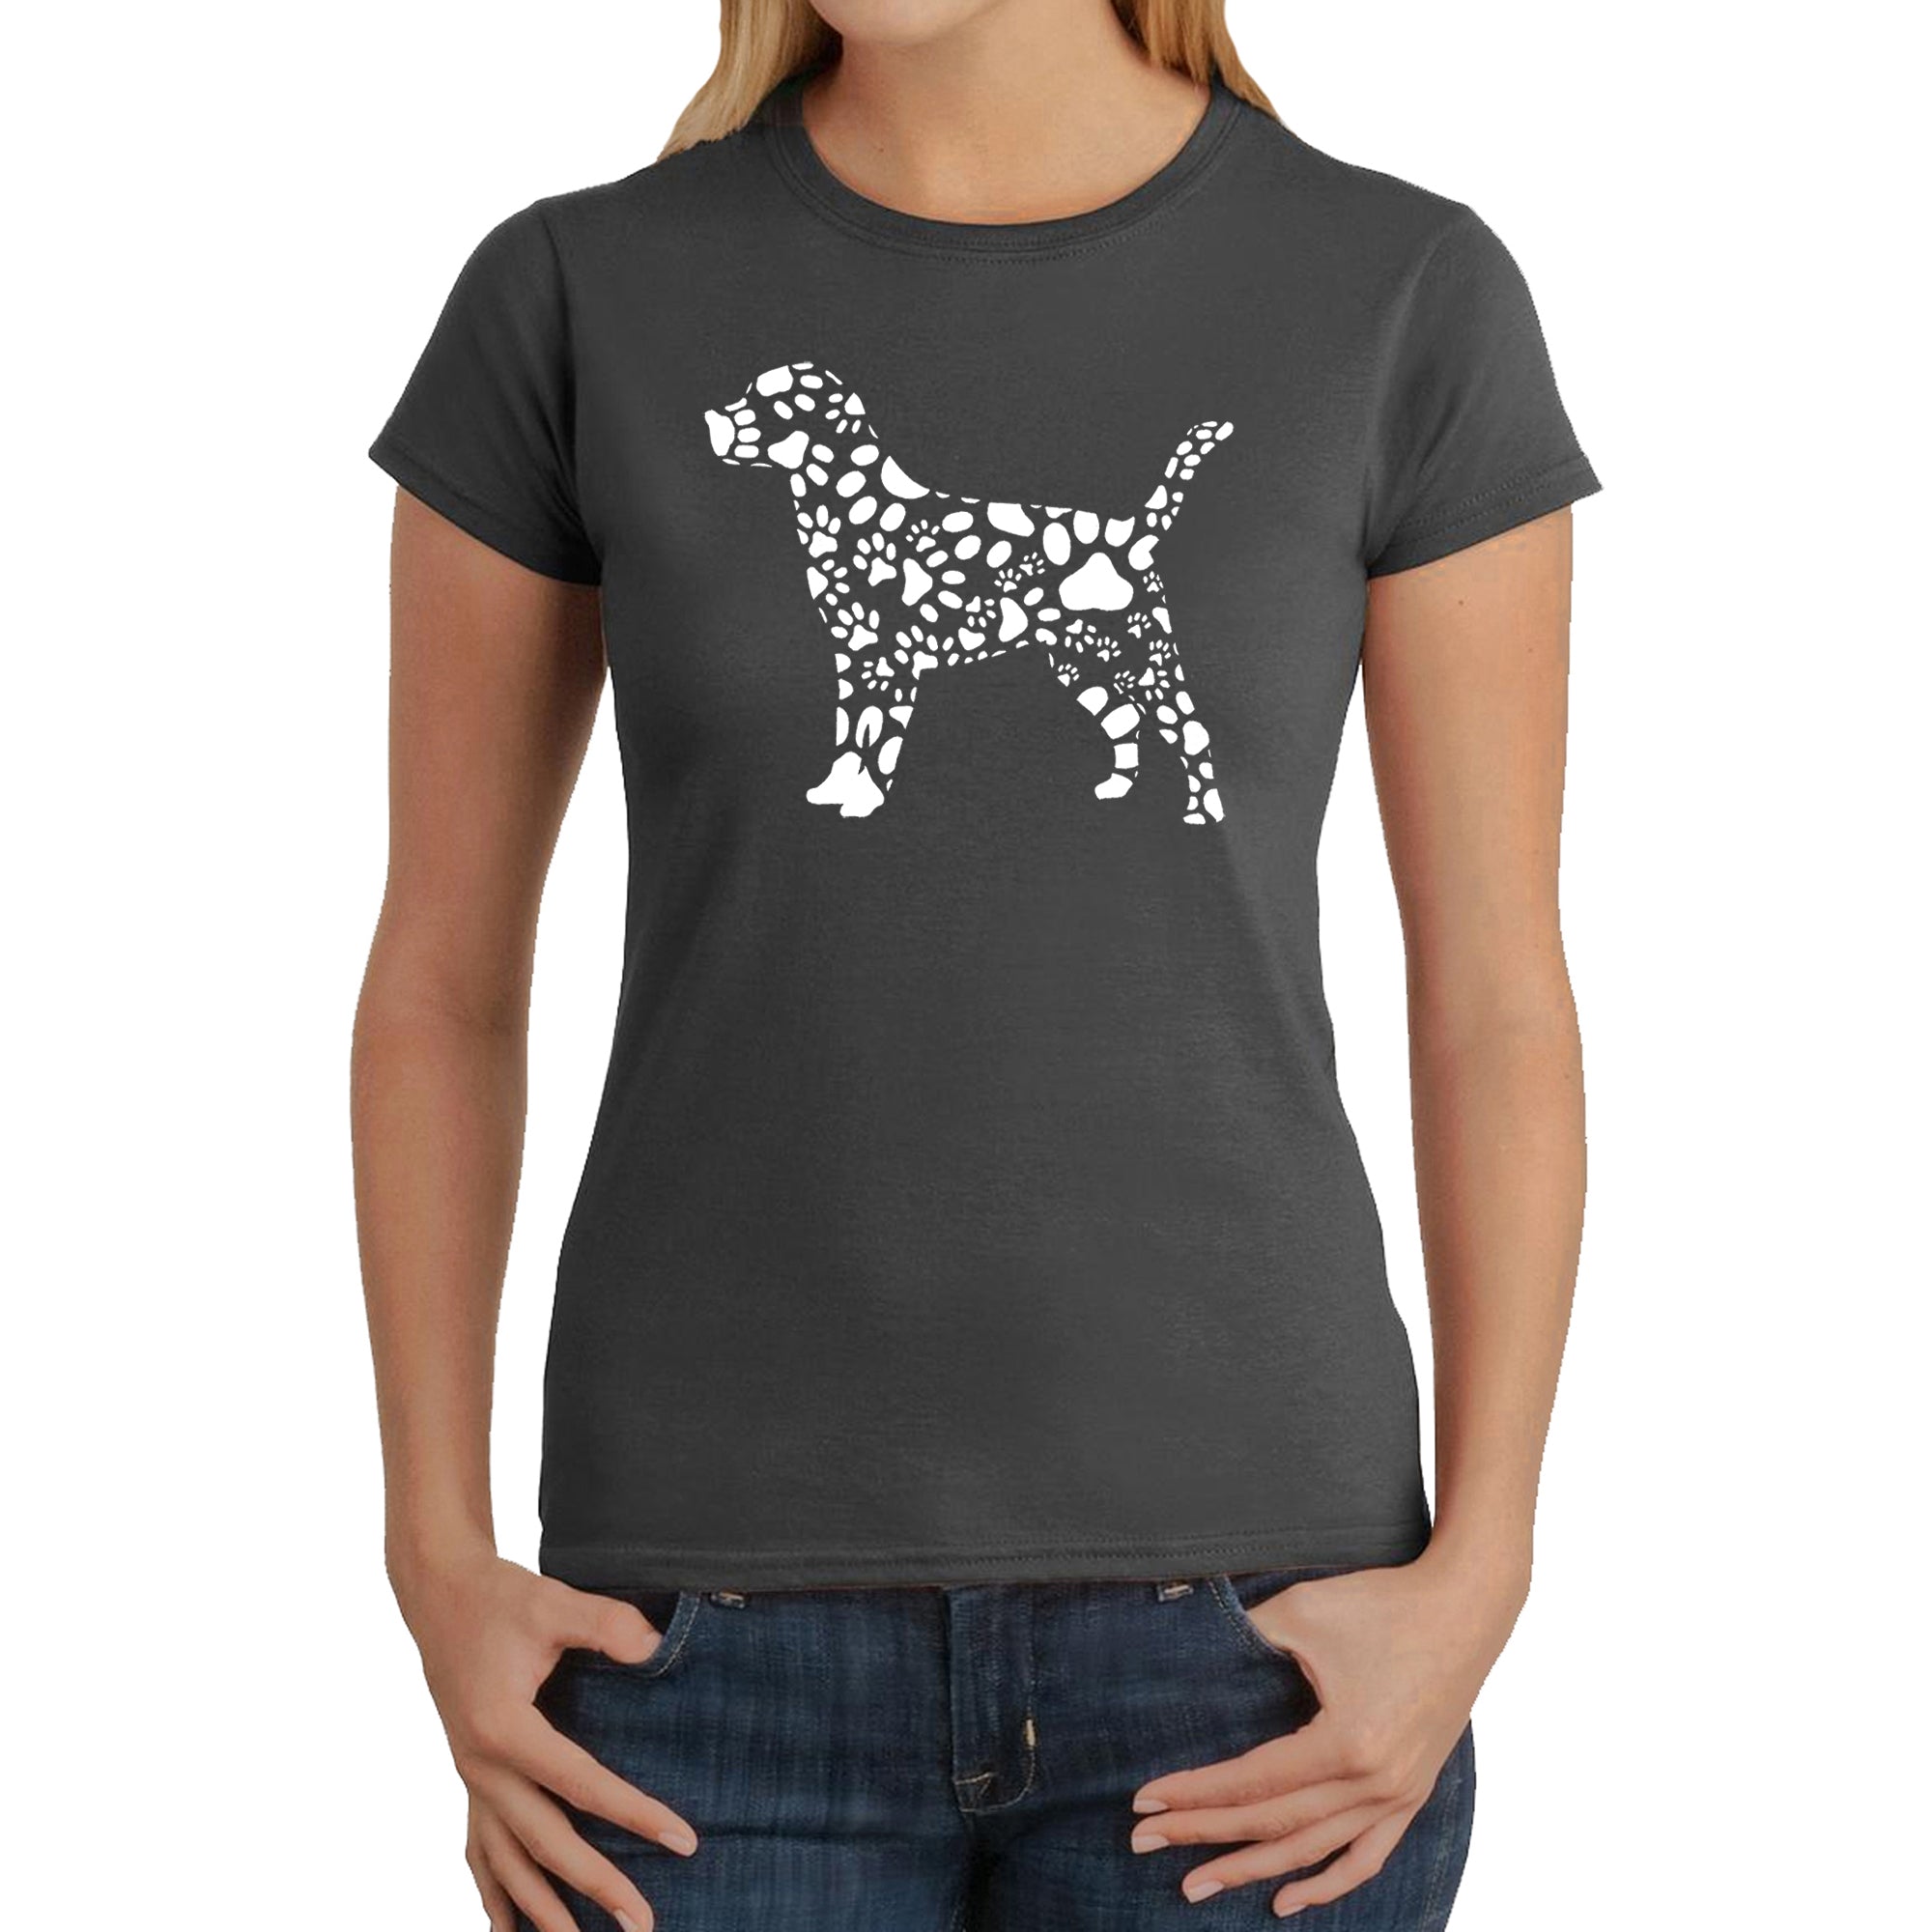 Dog Paw Prints - Women's Word Art T-Shirt - Grey - Small